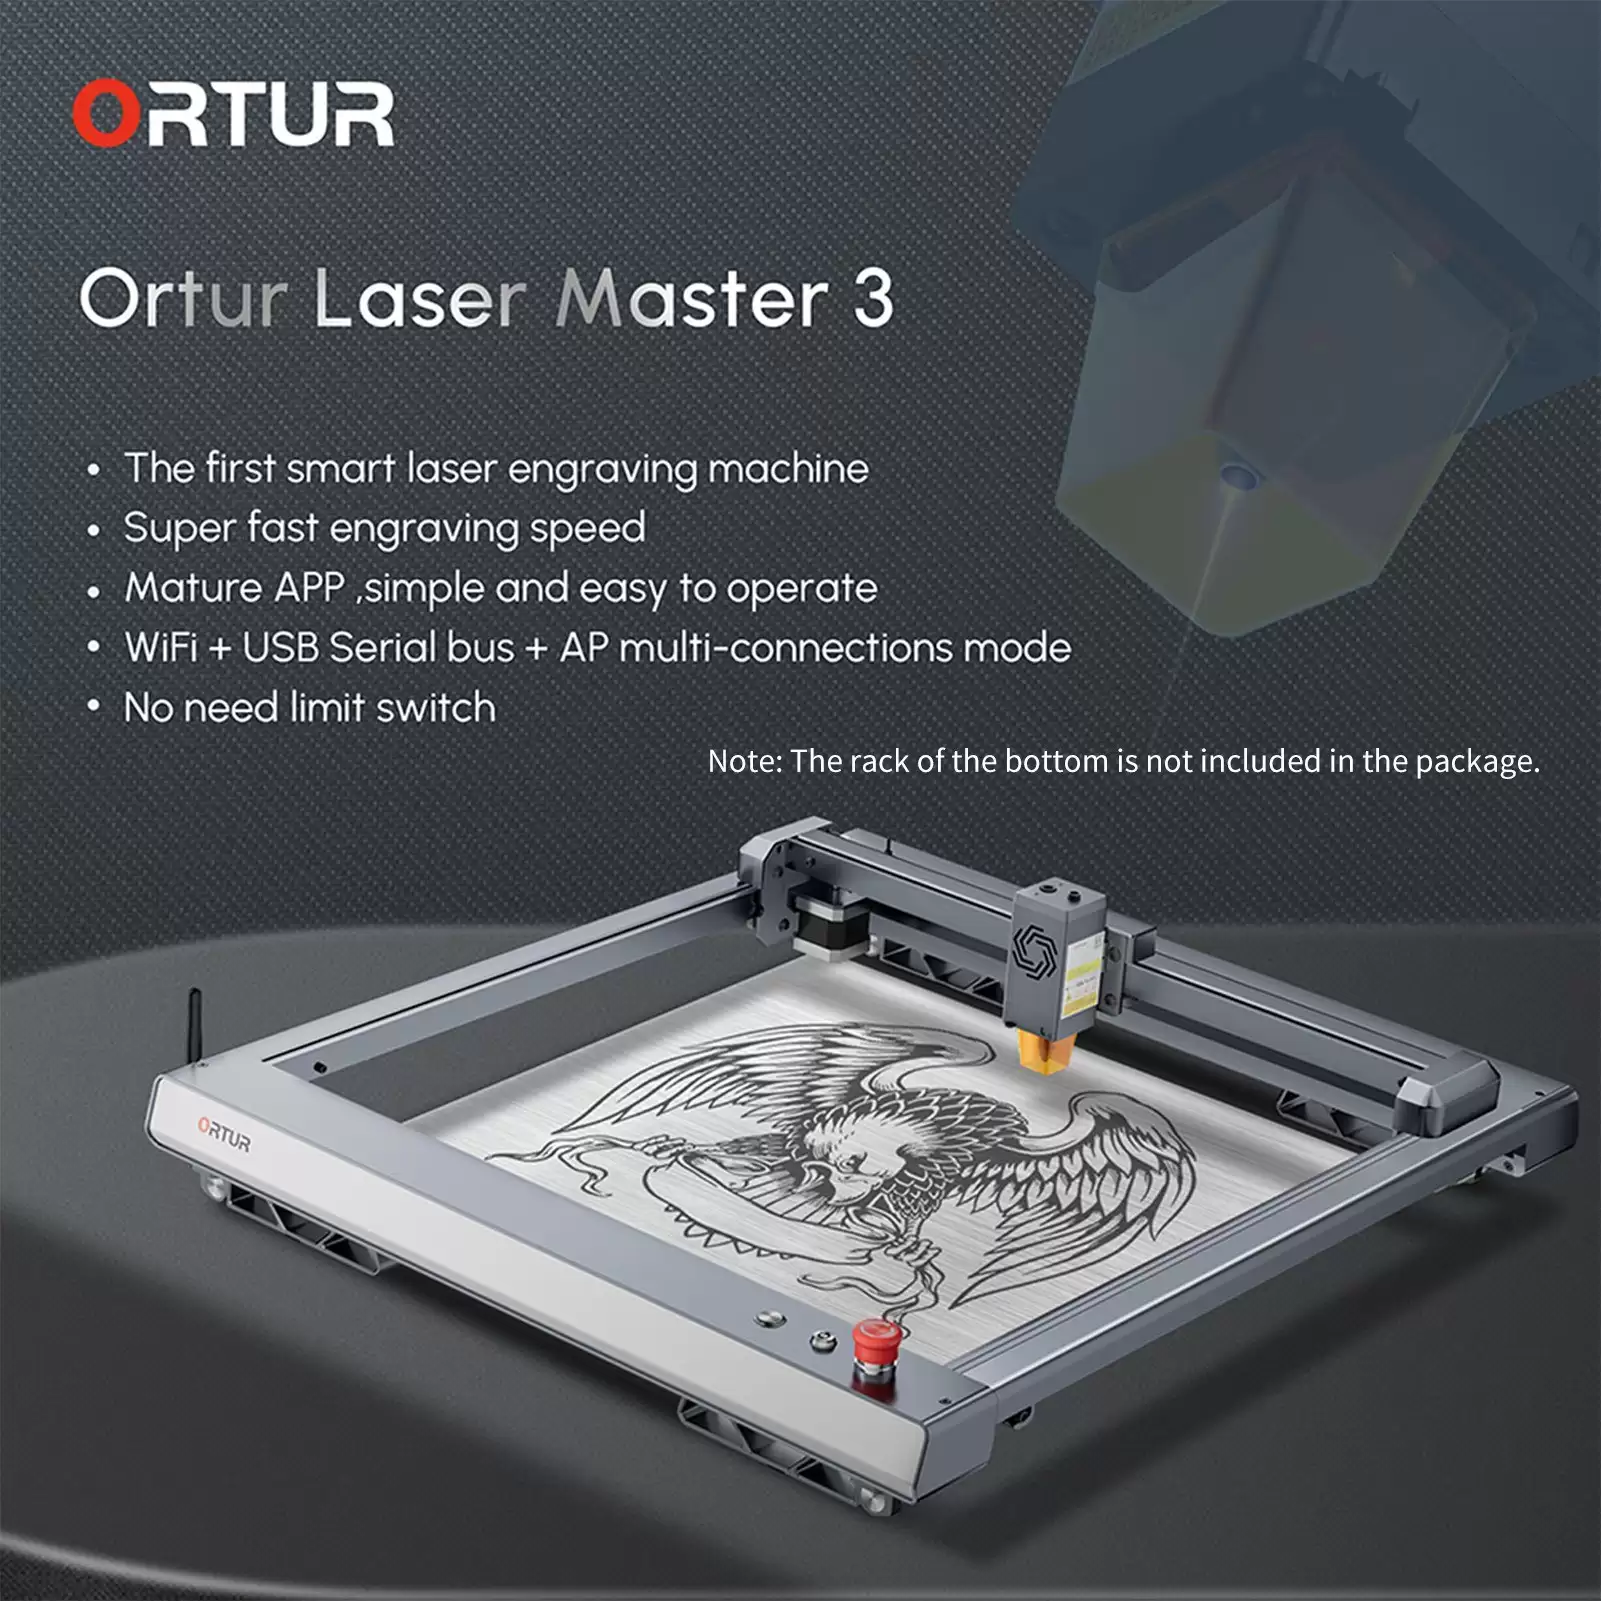 Spend $445.62 Ortur Laser Master 3 10w Laser Engraver Using This Cafago Discount Code